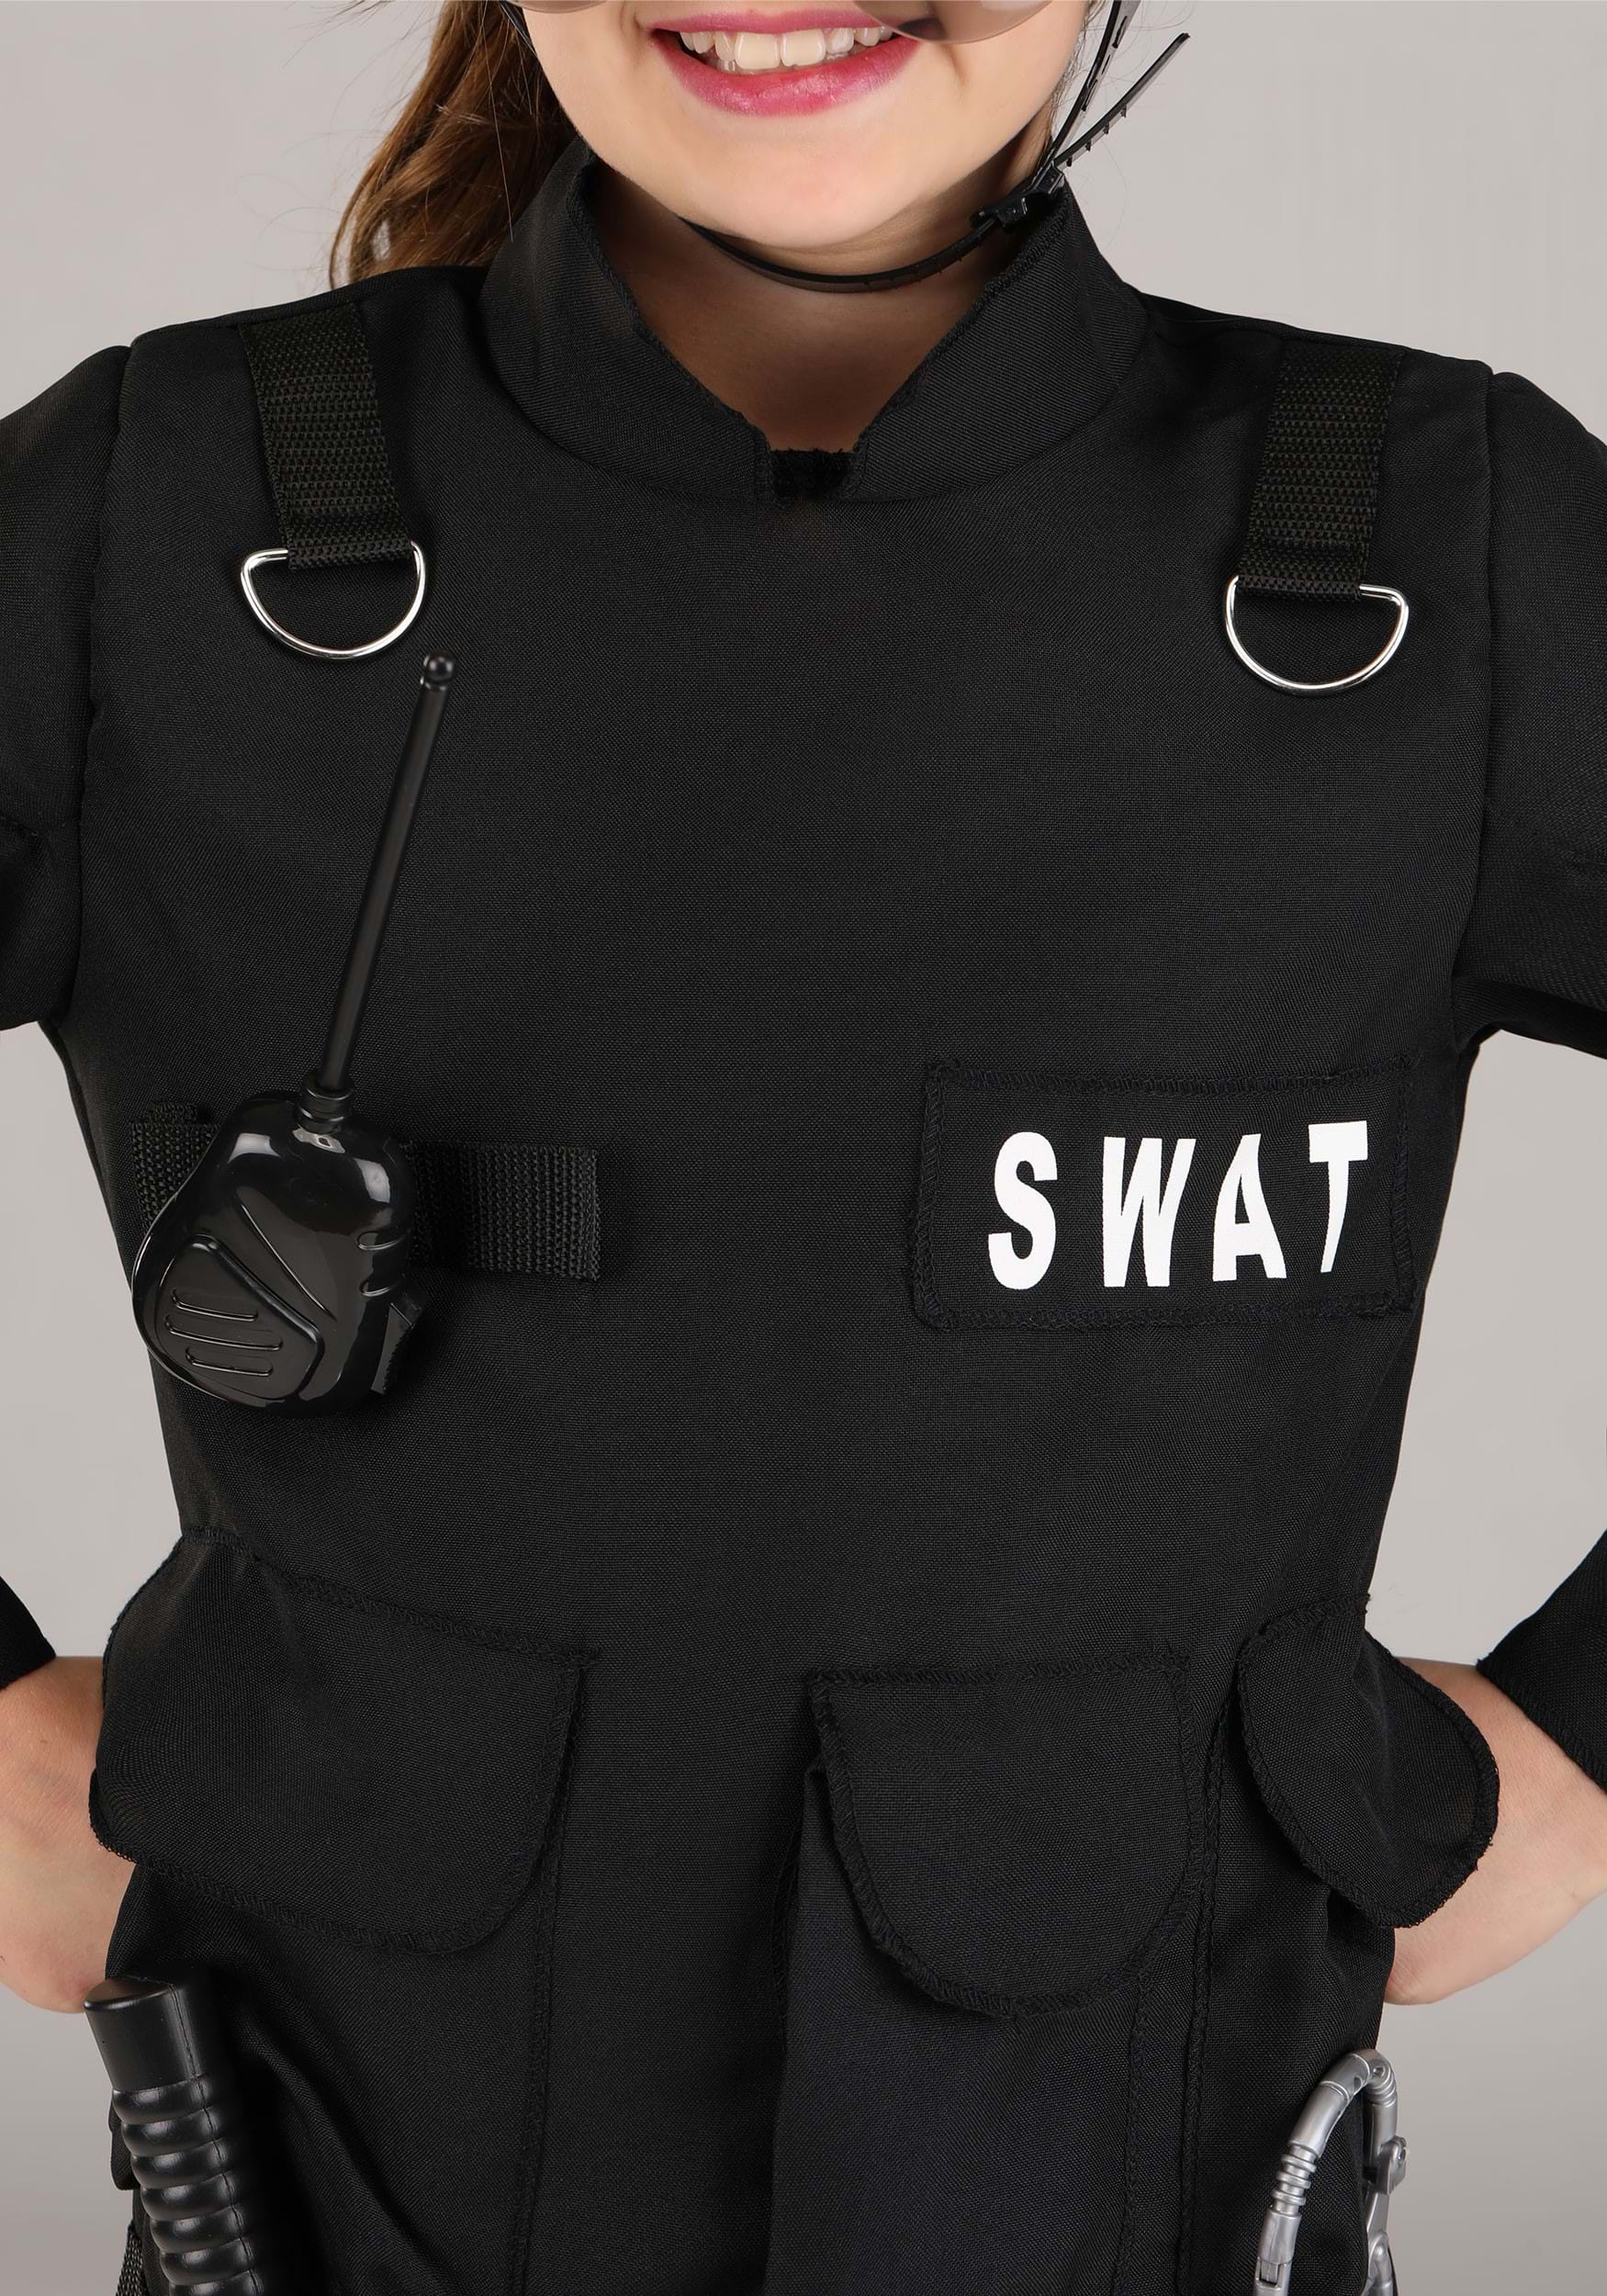 Fun Costume SWAT Commander Costume Swat Team Costume for Boys in